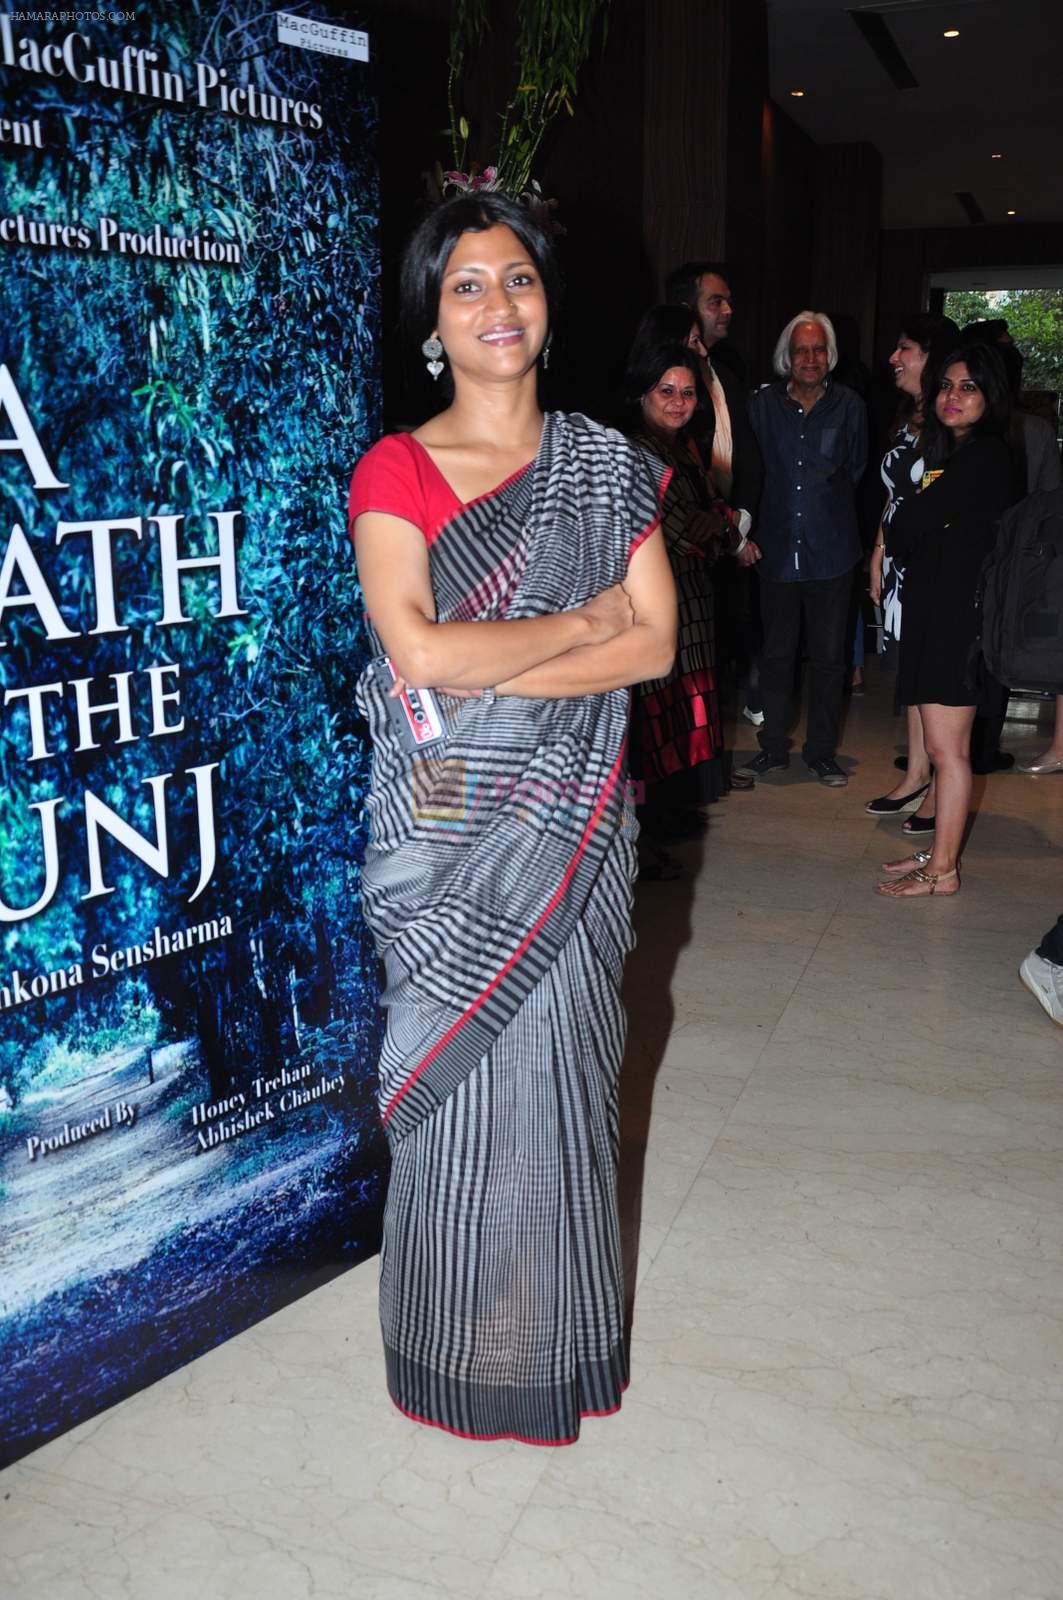 Konkona Sen Sharma at Death in the Gunj film launch on 5th Jan 2016